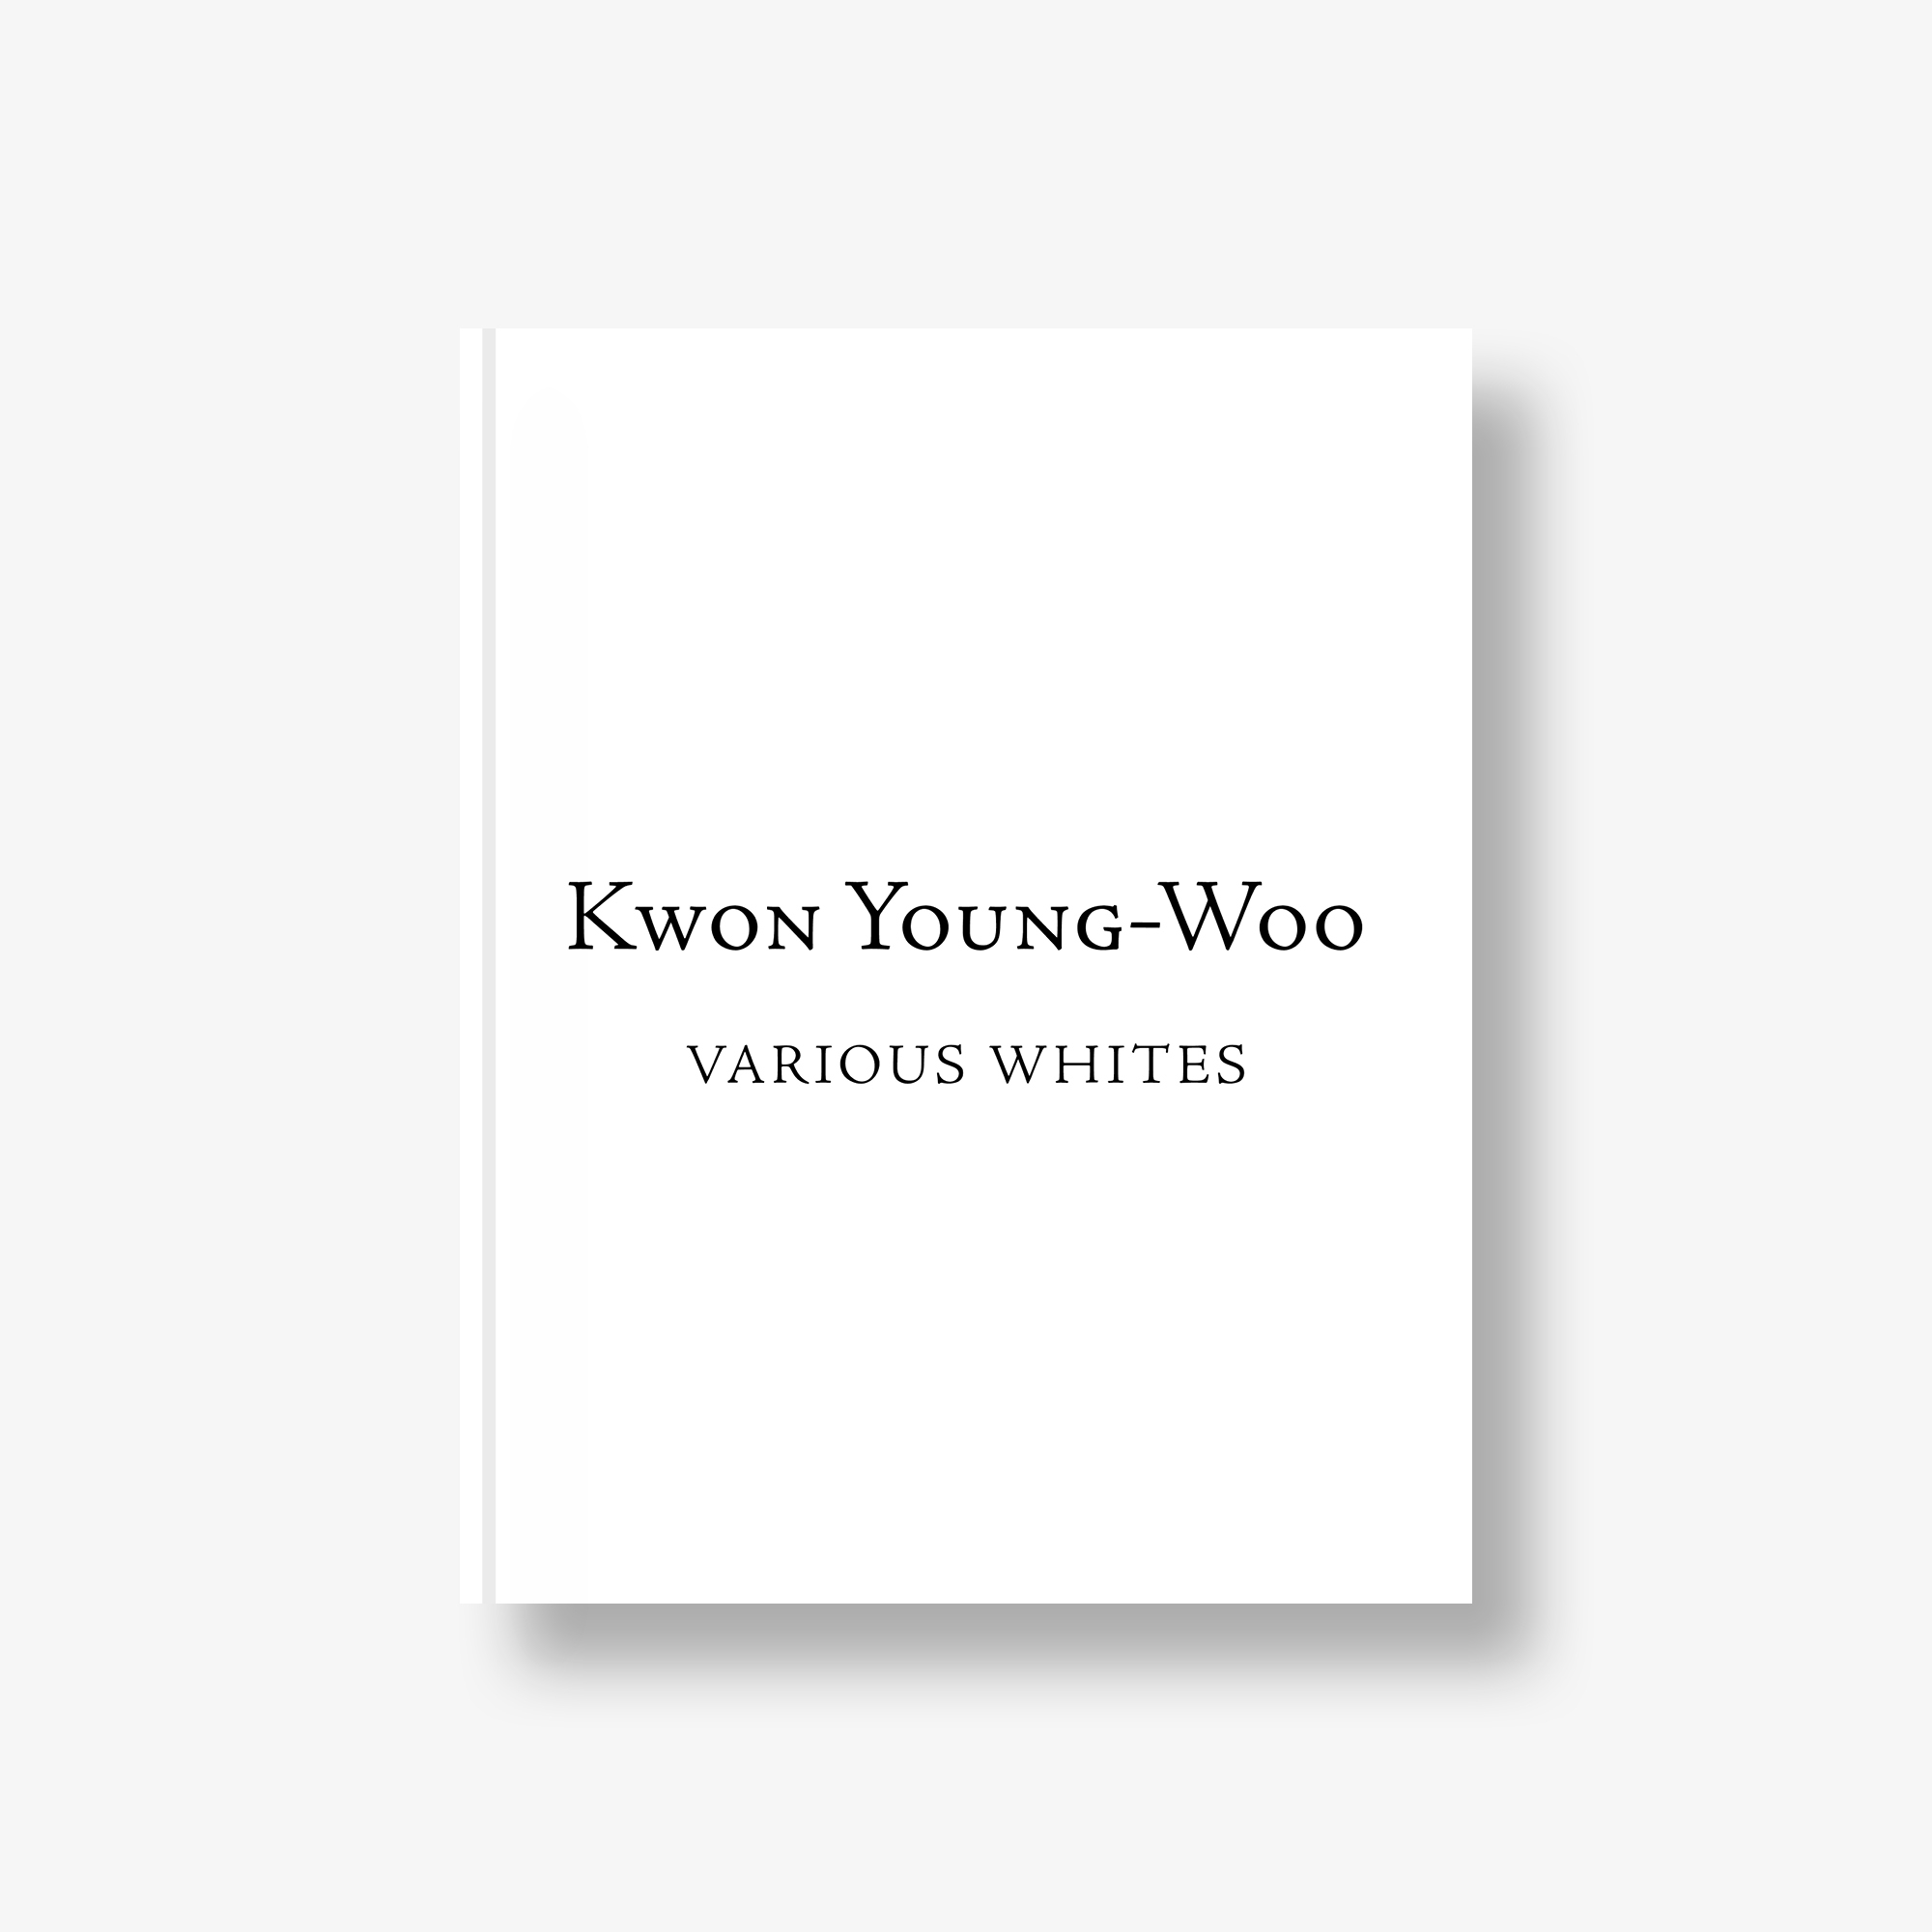 Kwon Young-Woo: Various Whites